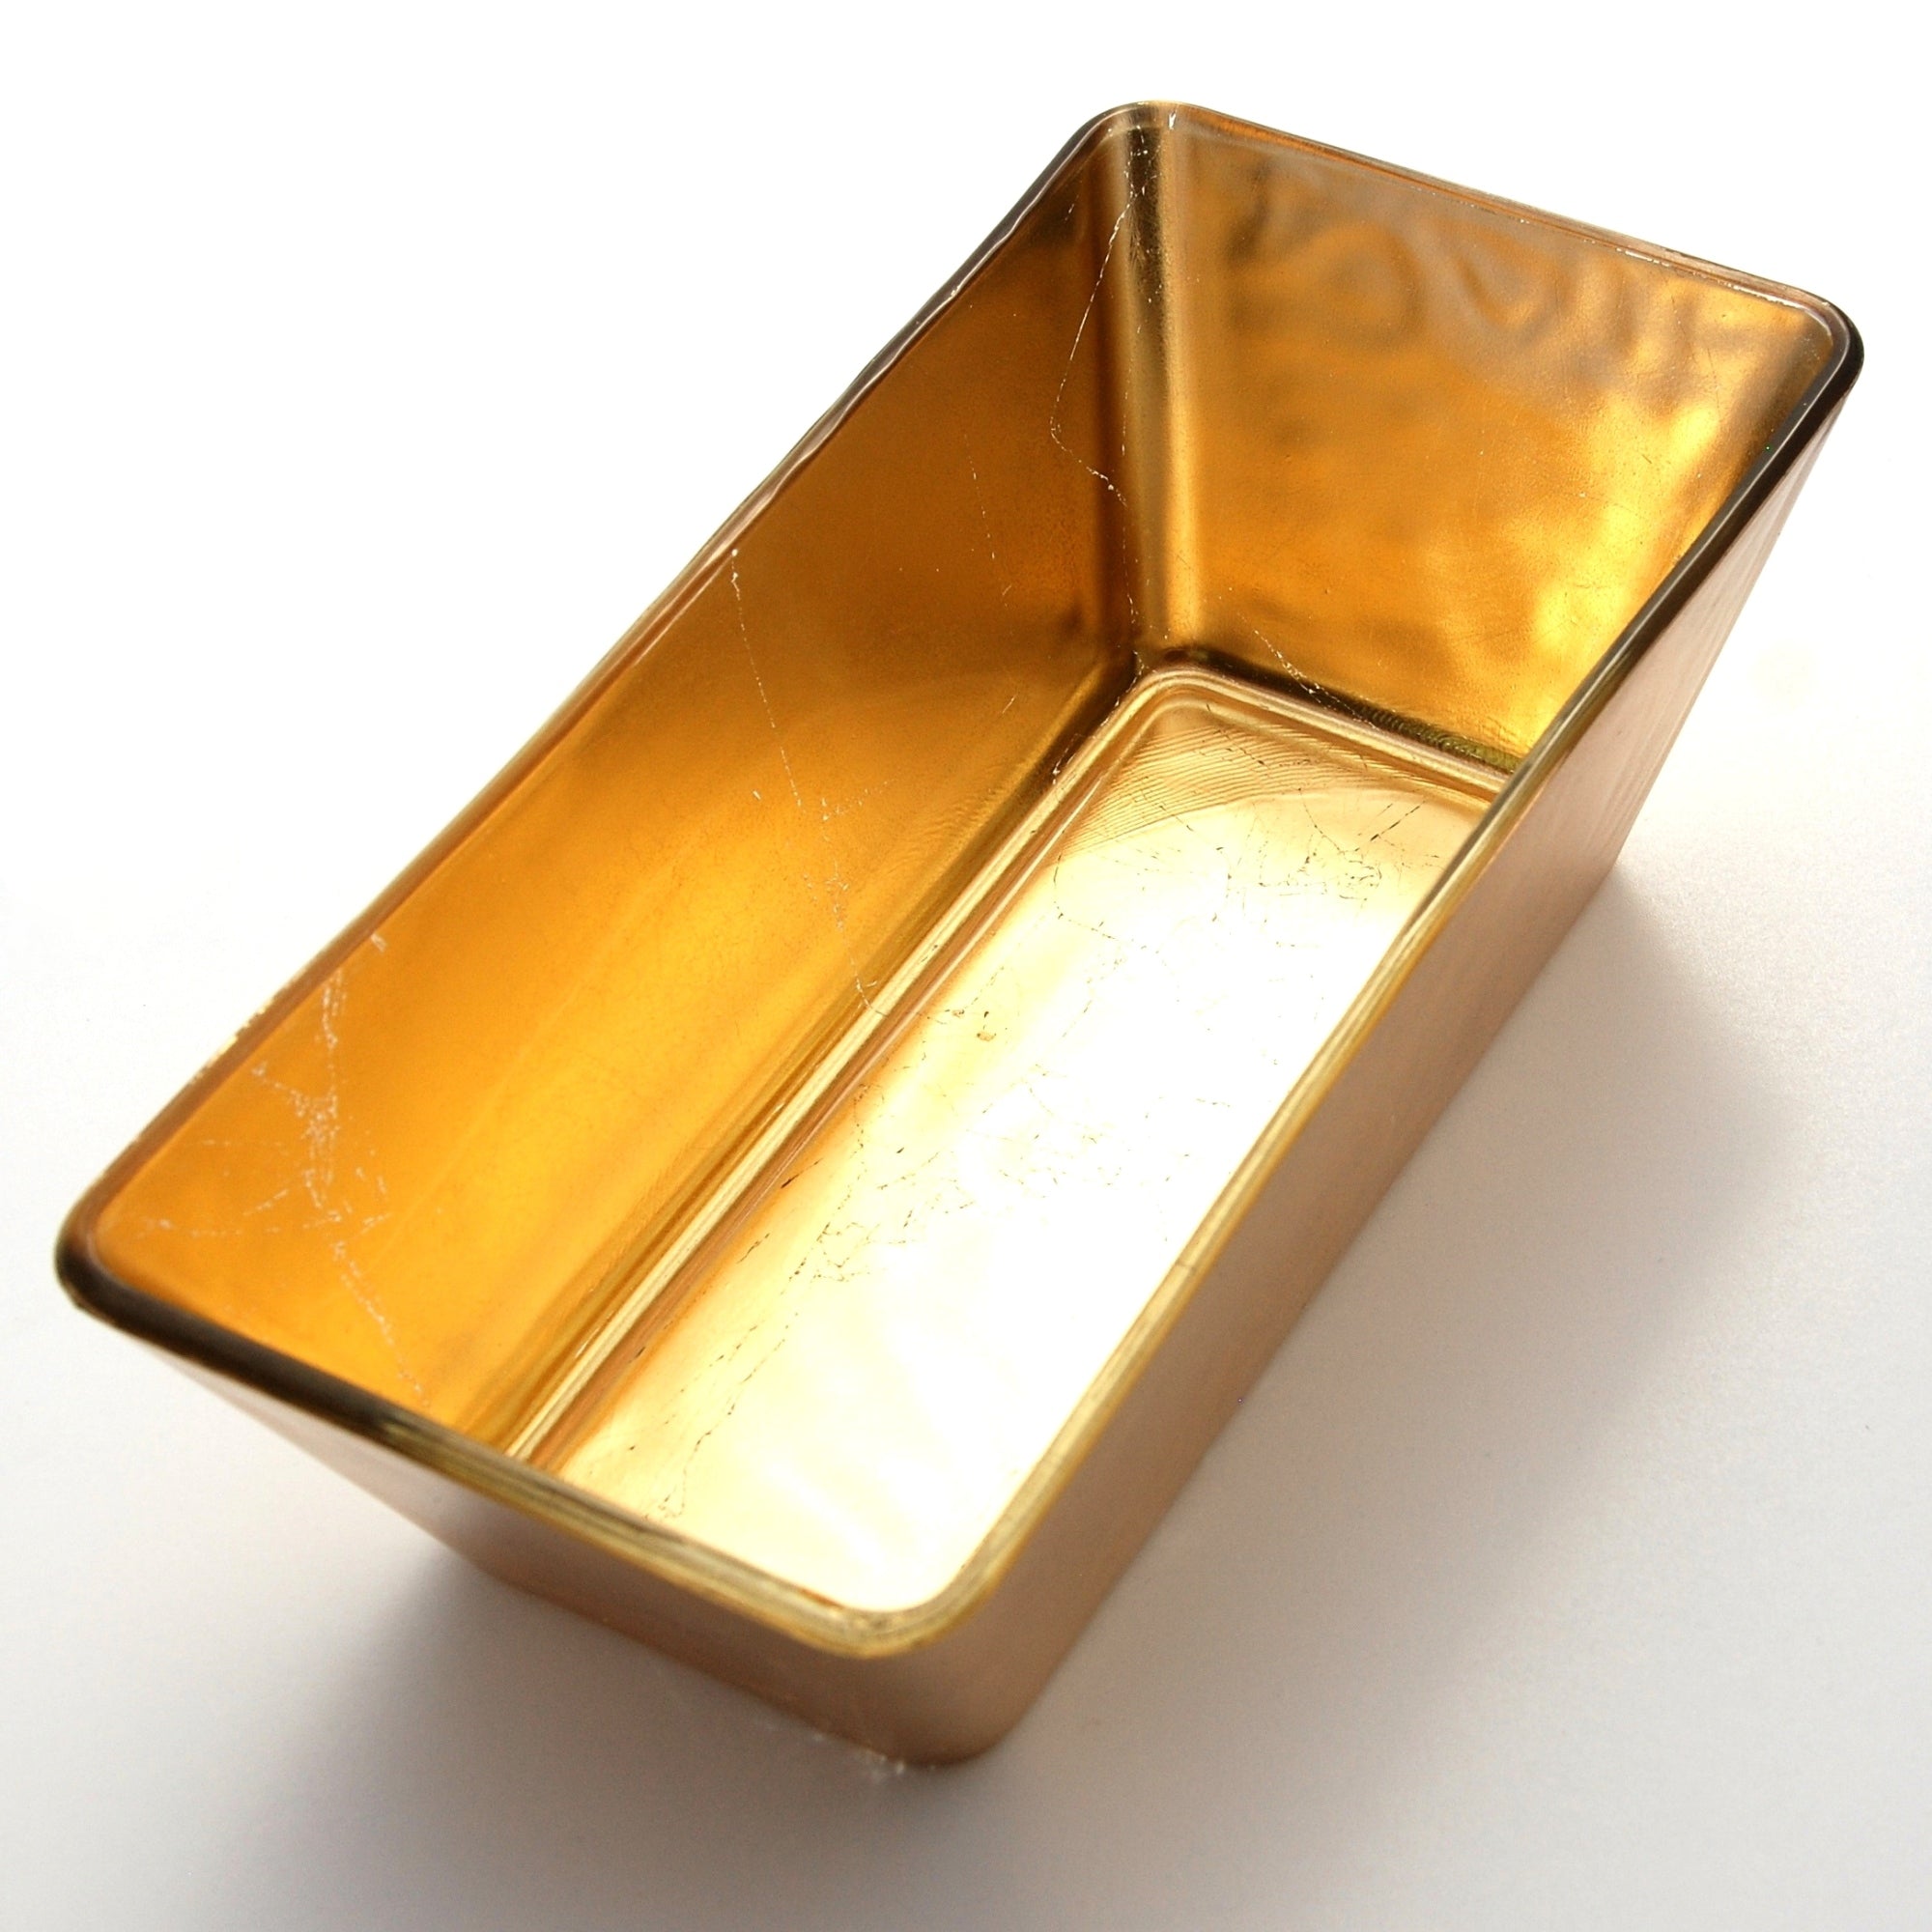 Greek Gold Gilded 13" Glass Rectangular Bowl - POPvault